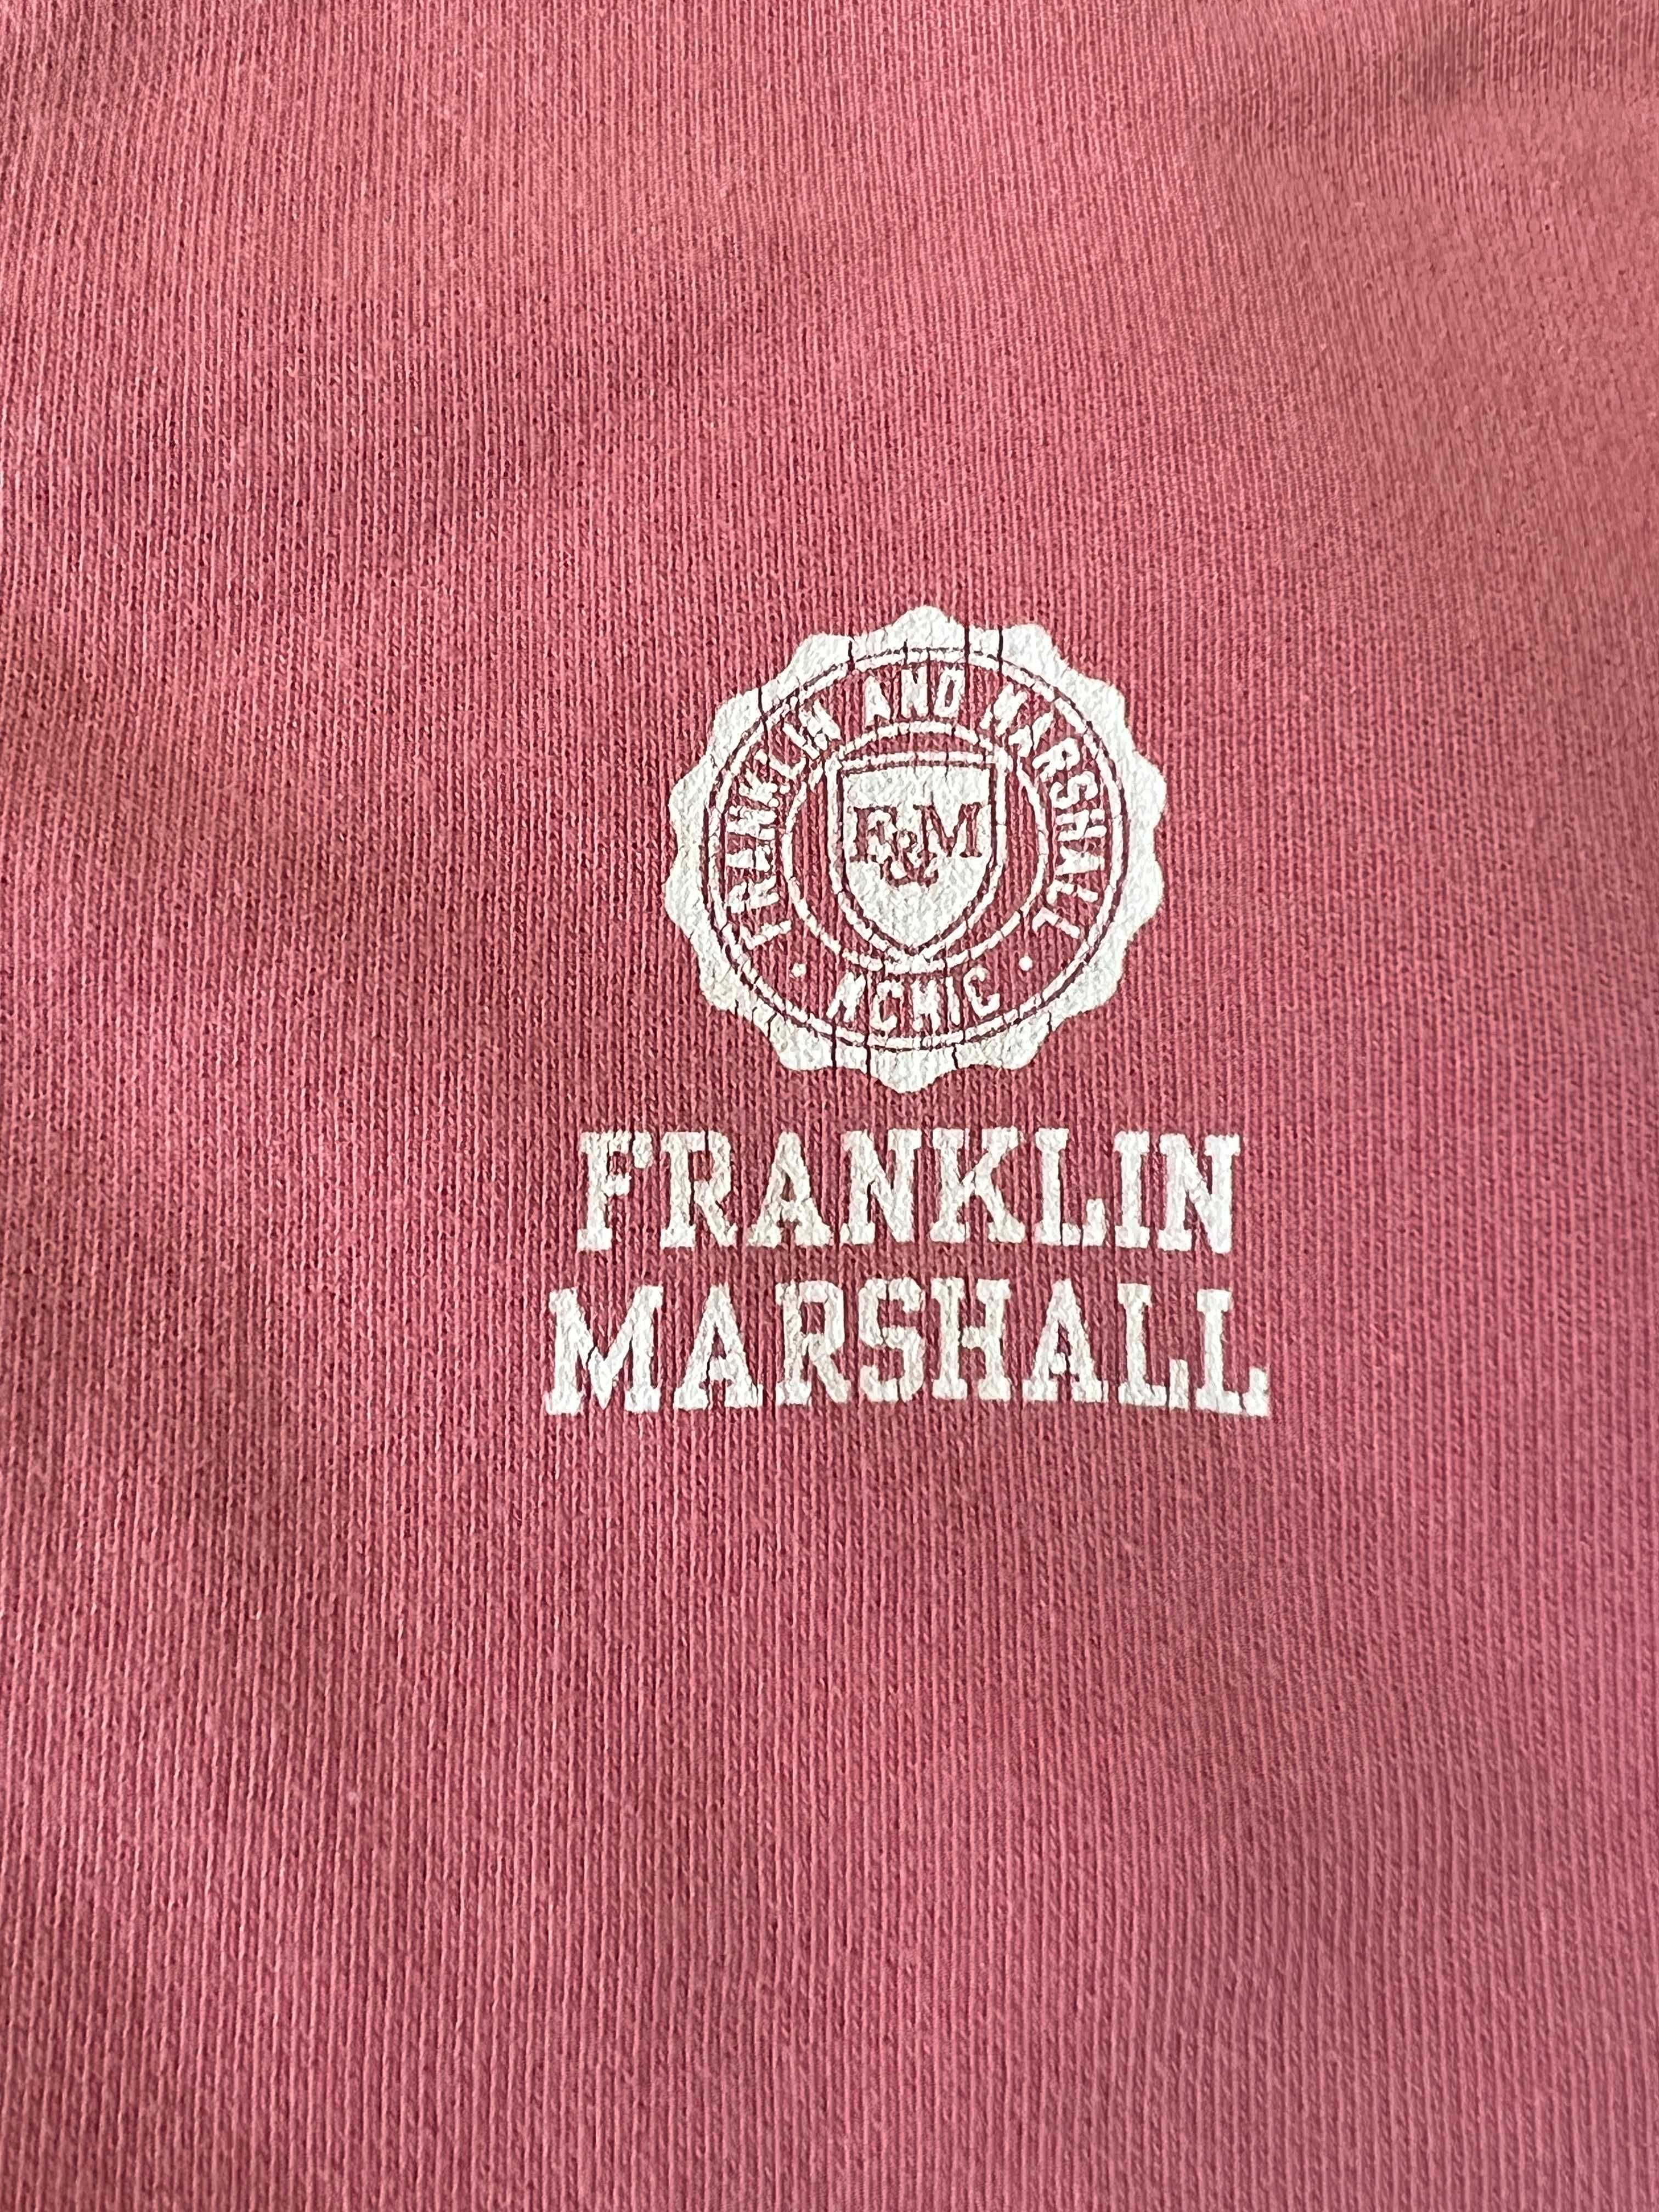 Bluza Franklin Marshall